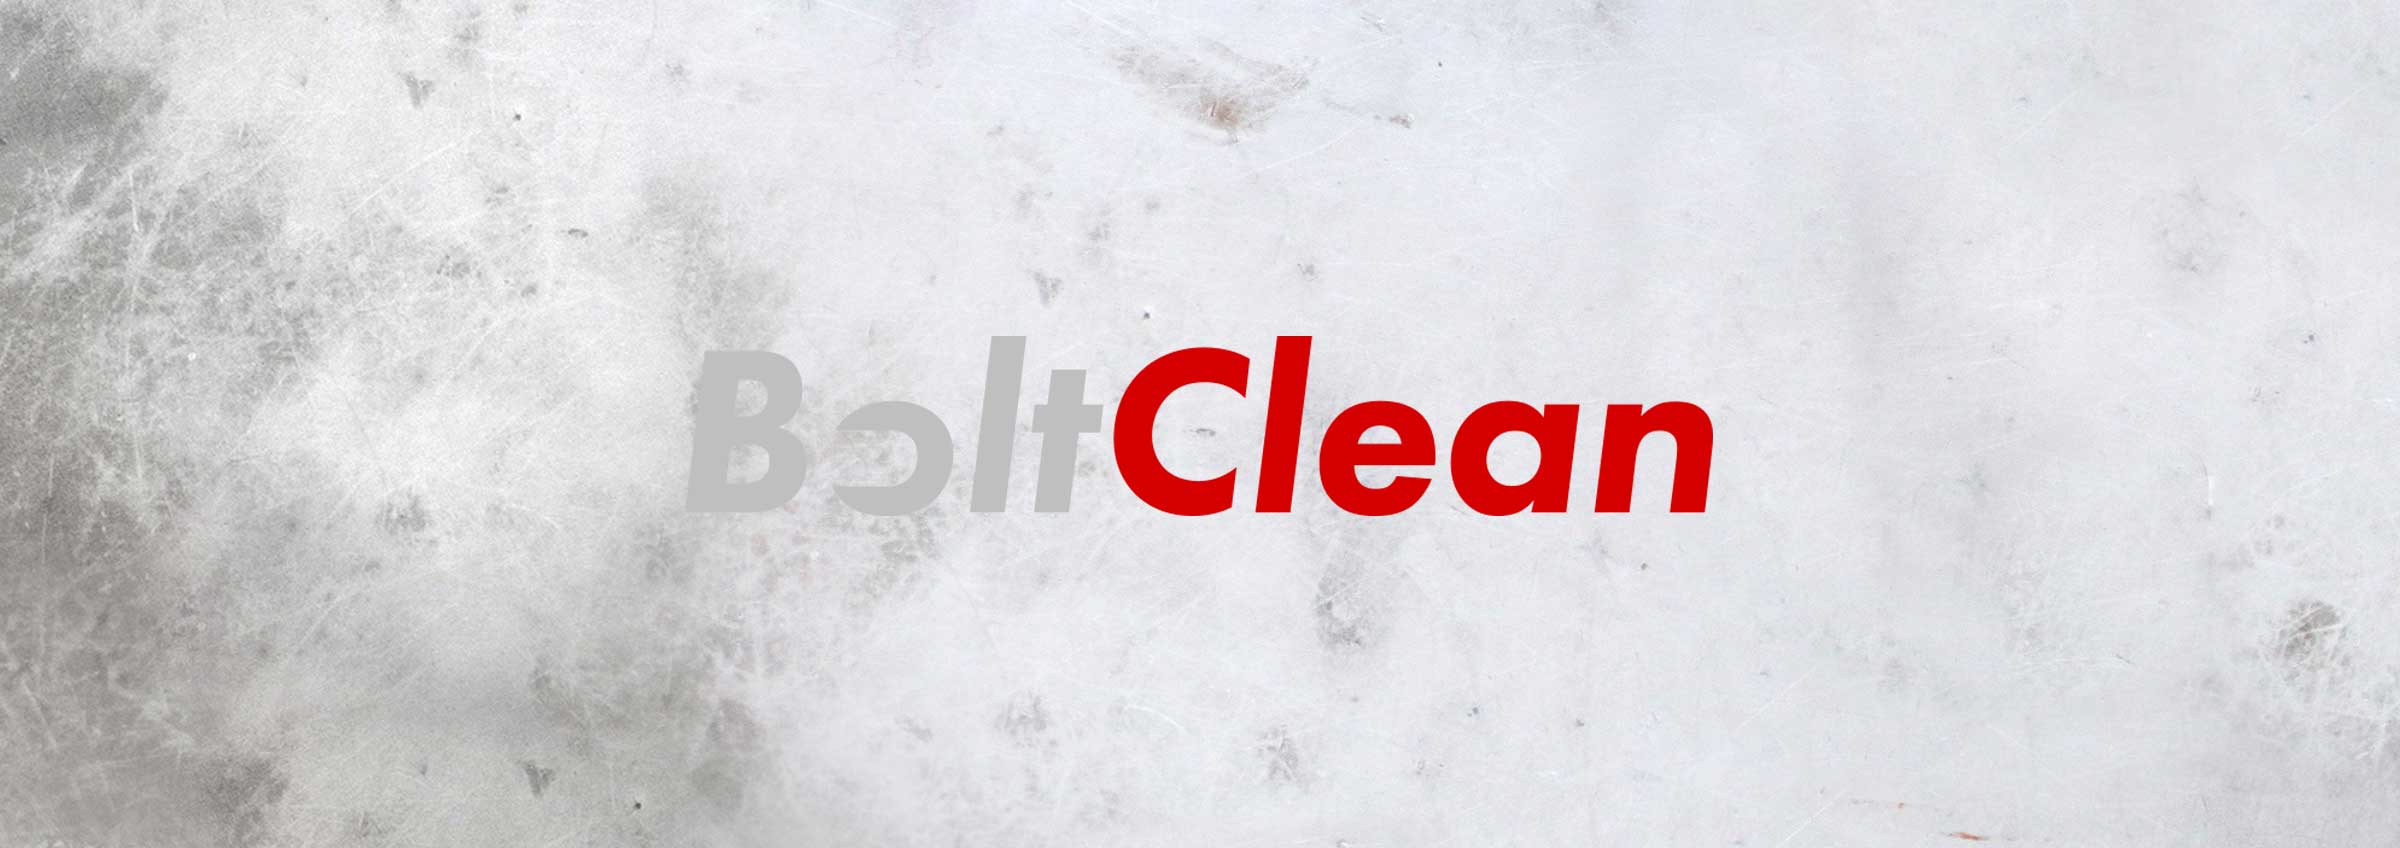 BoltClean logo header